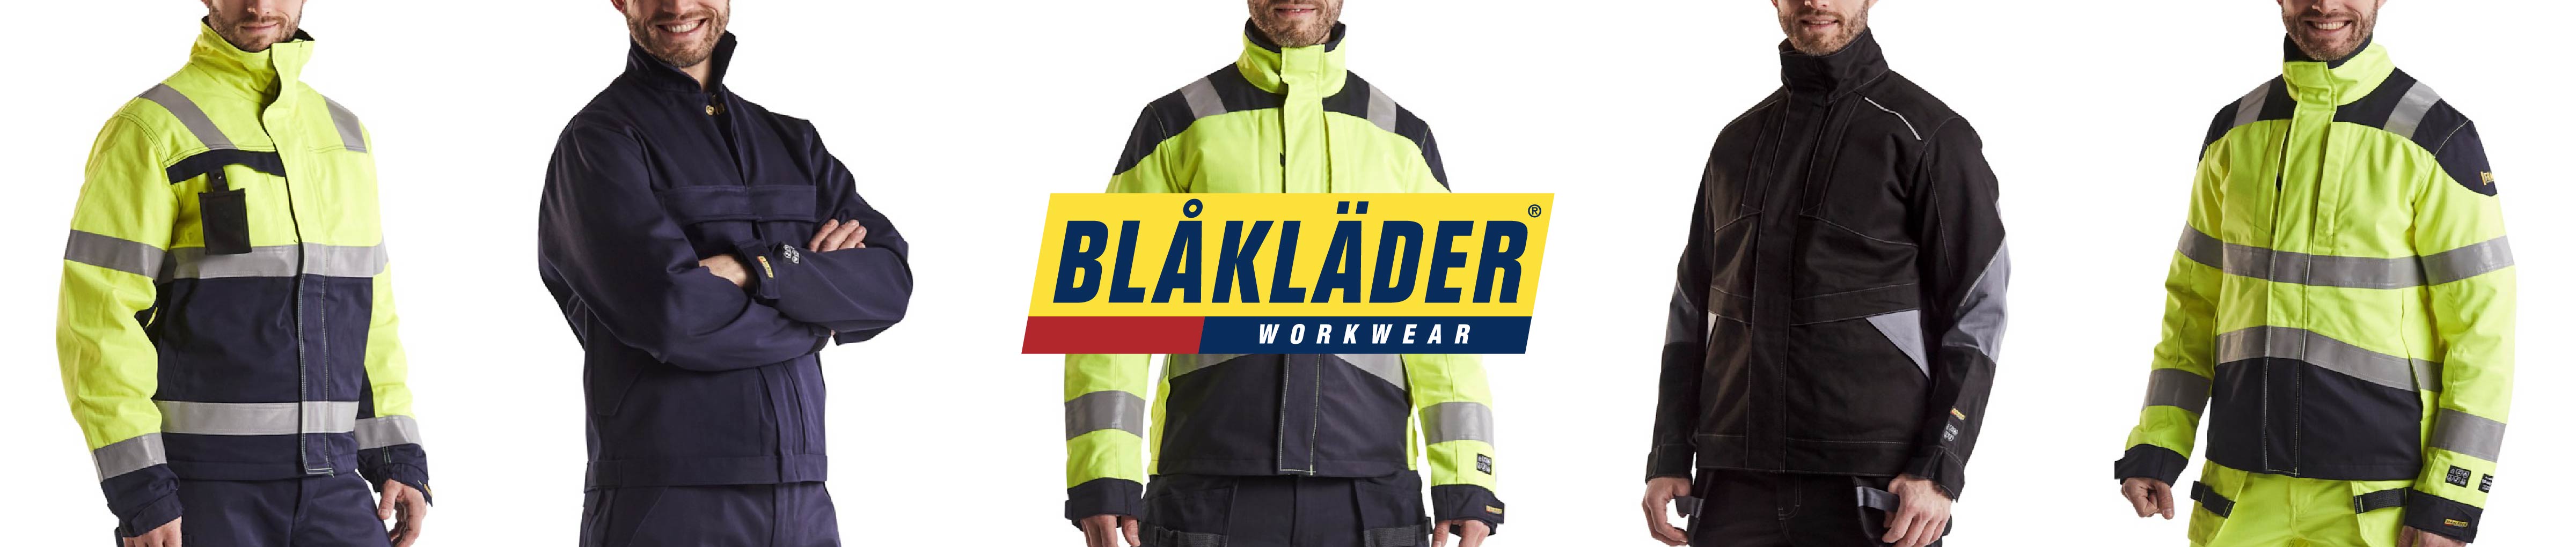 Flame retardant work jackets